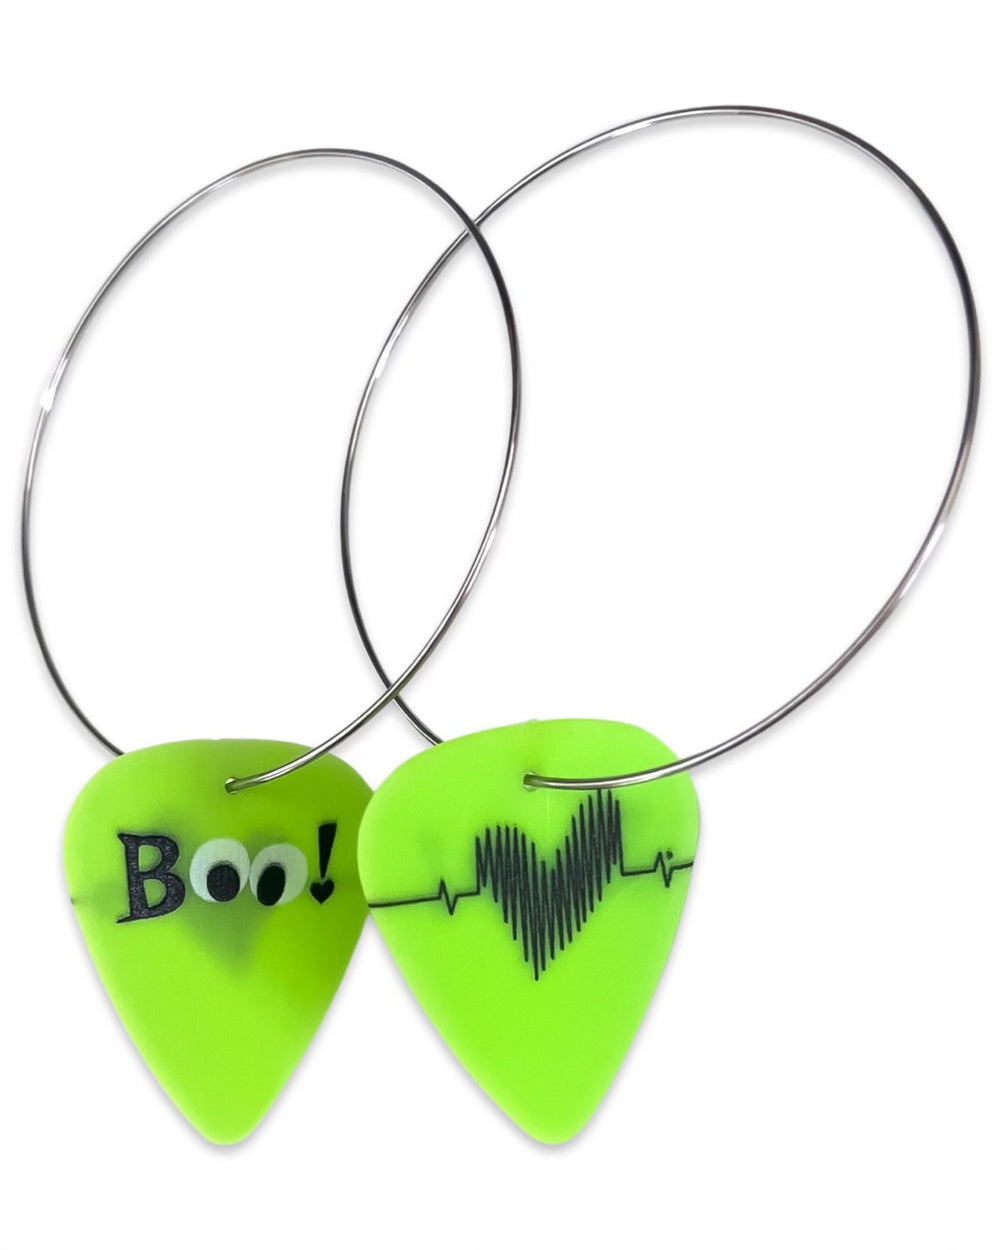 WS BOO! Neon Green Reversible Single Guitar Pick Earrings